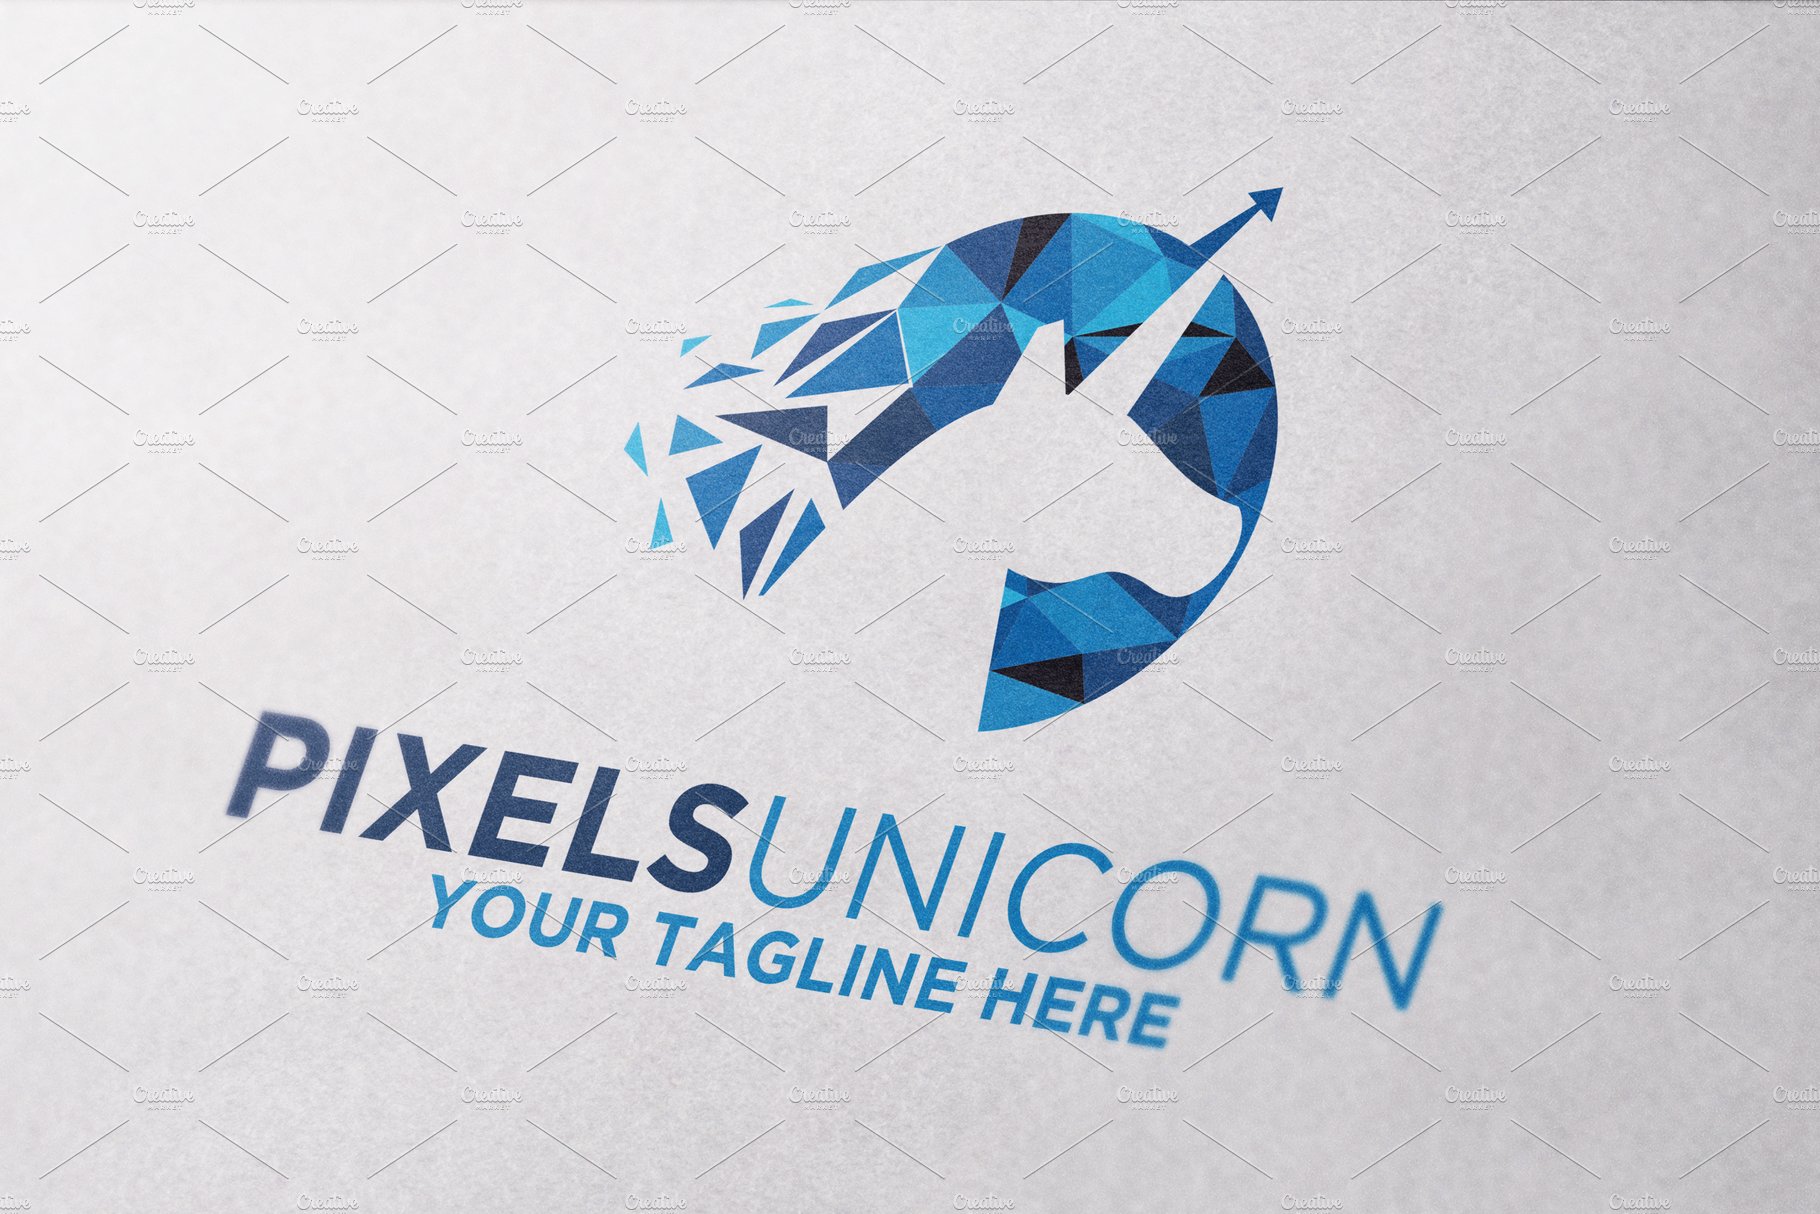 Pixels Digital Unicorn Logo cover image.